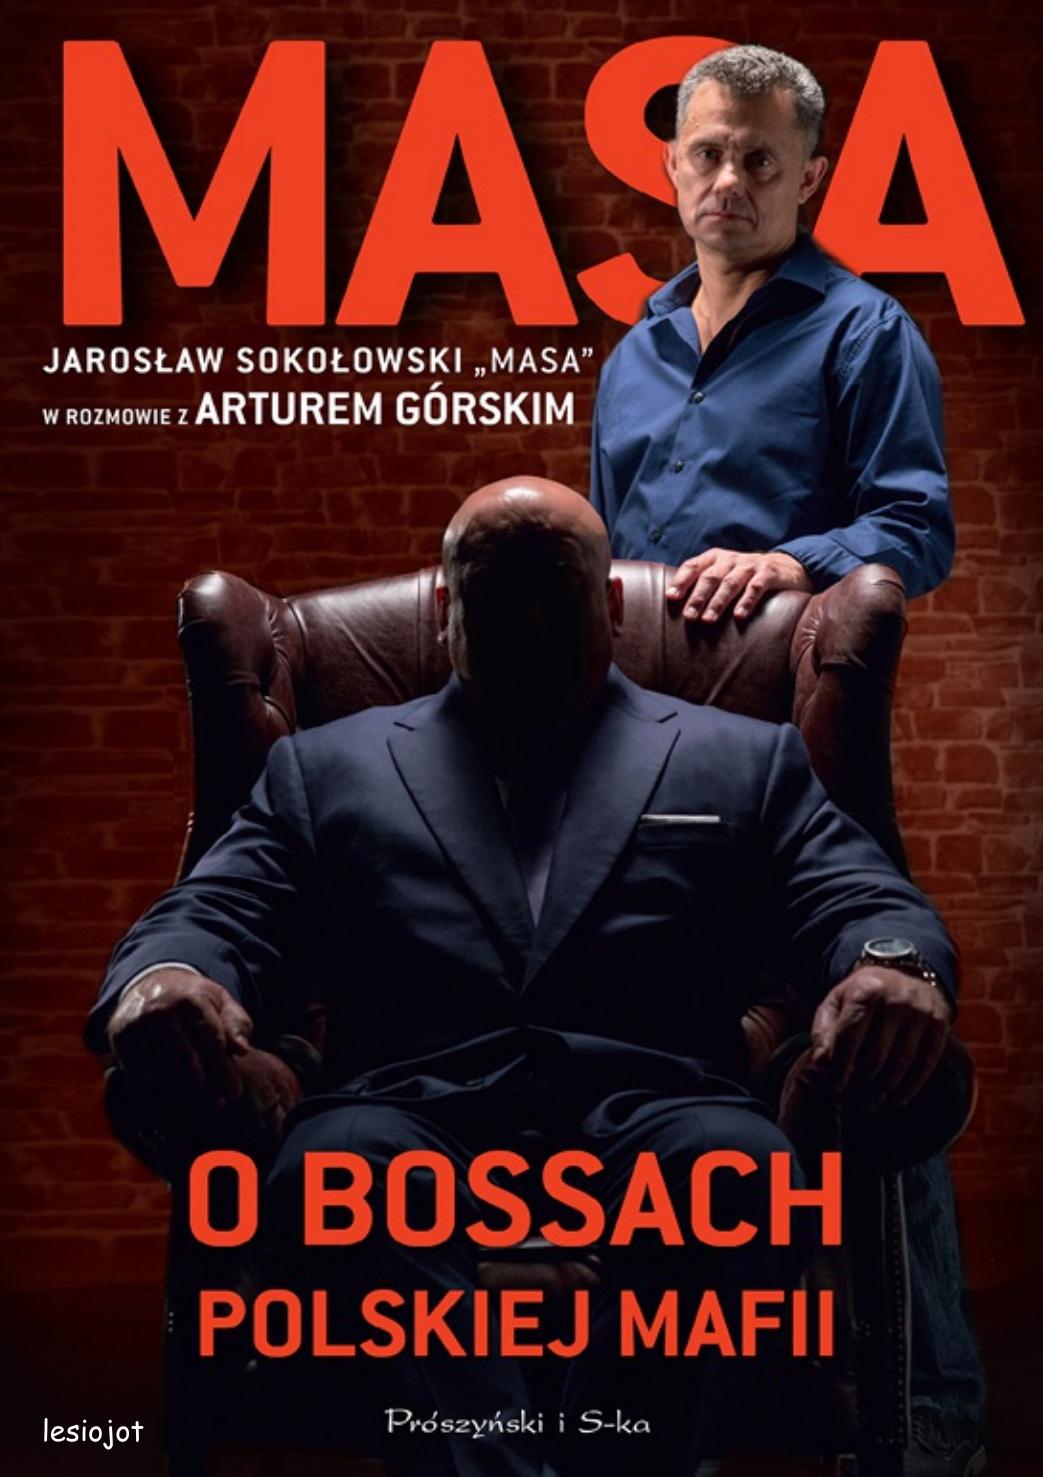 04 - Masa o bossach polskiej mafii - cover.jpg